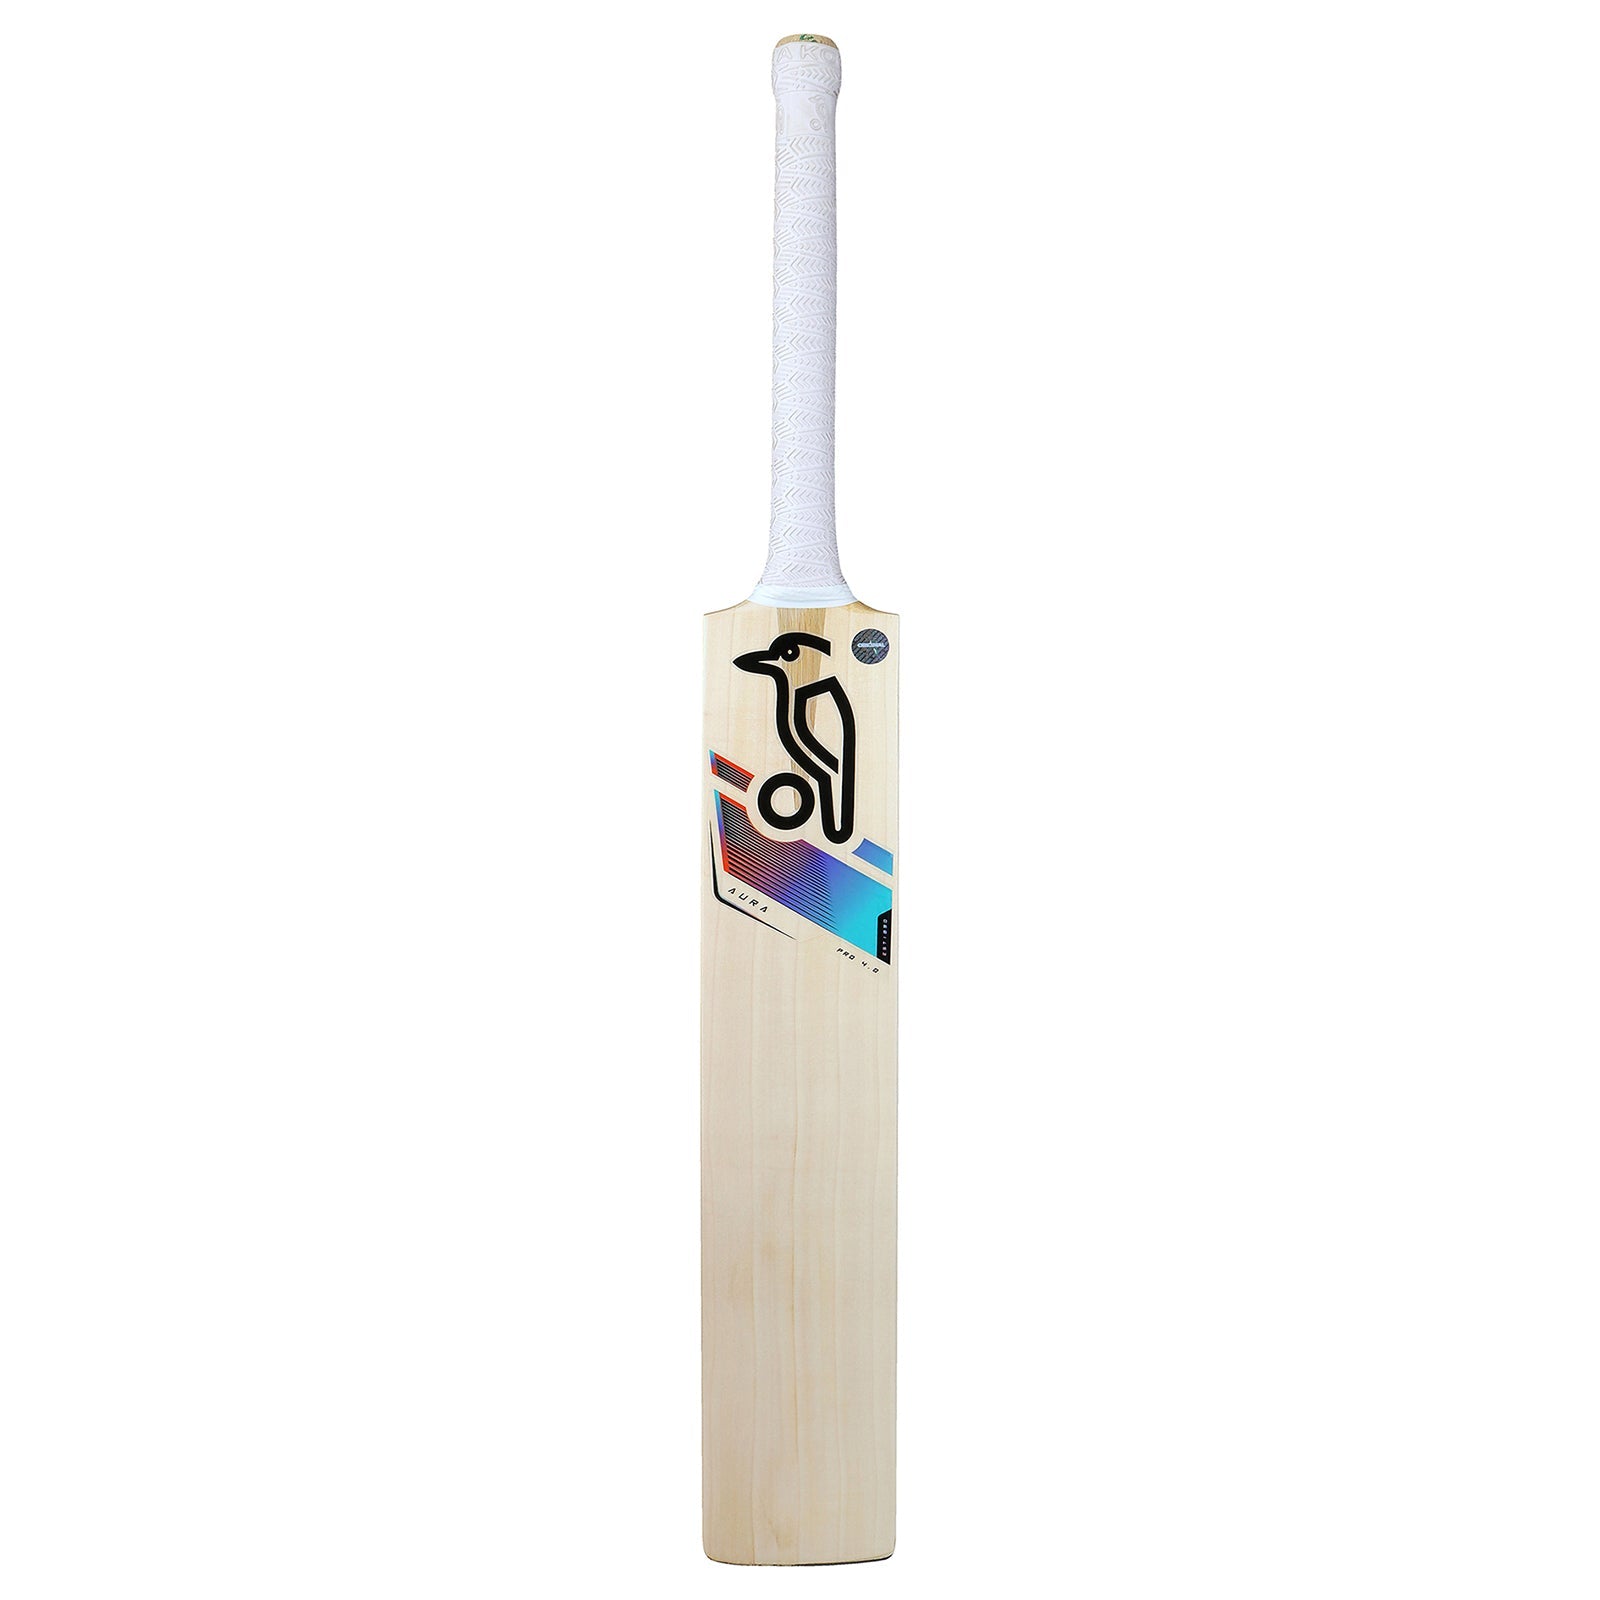 Kookaburra Aura Pro 4.0 Cricket Bat - Harrow